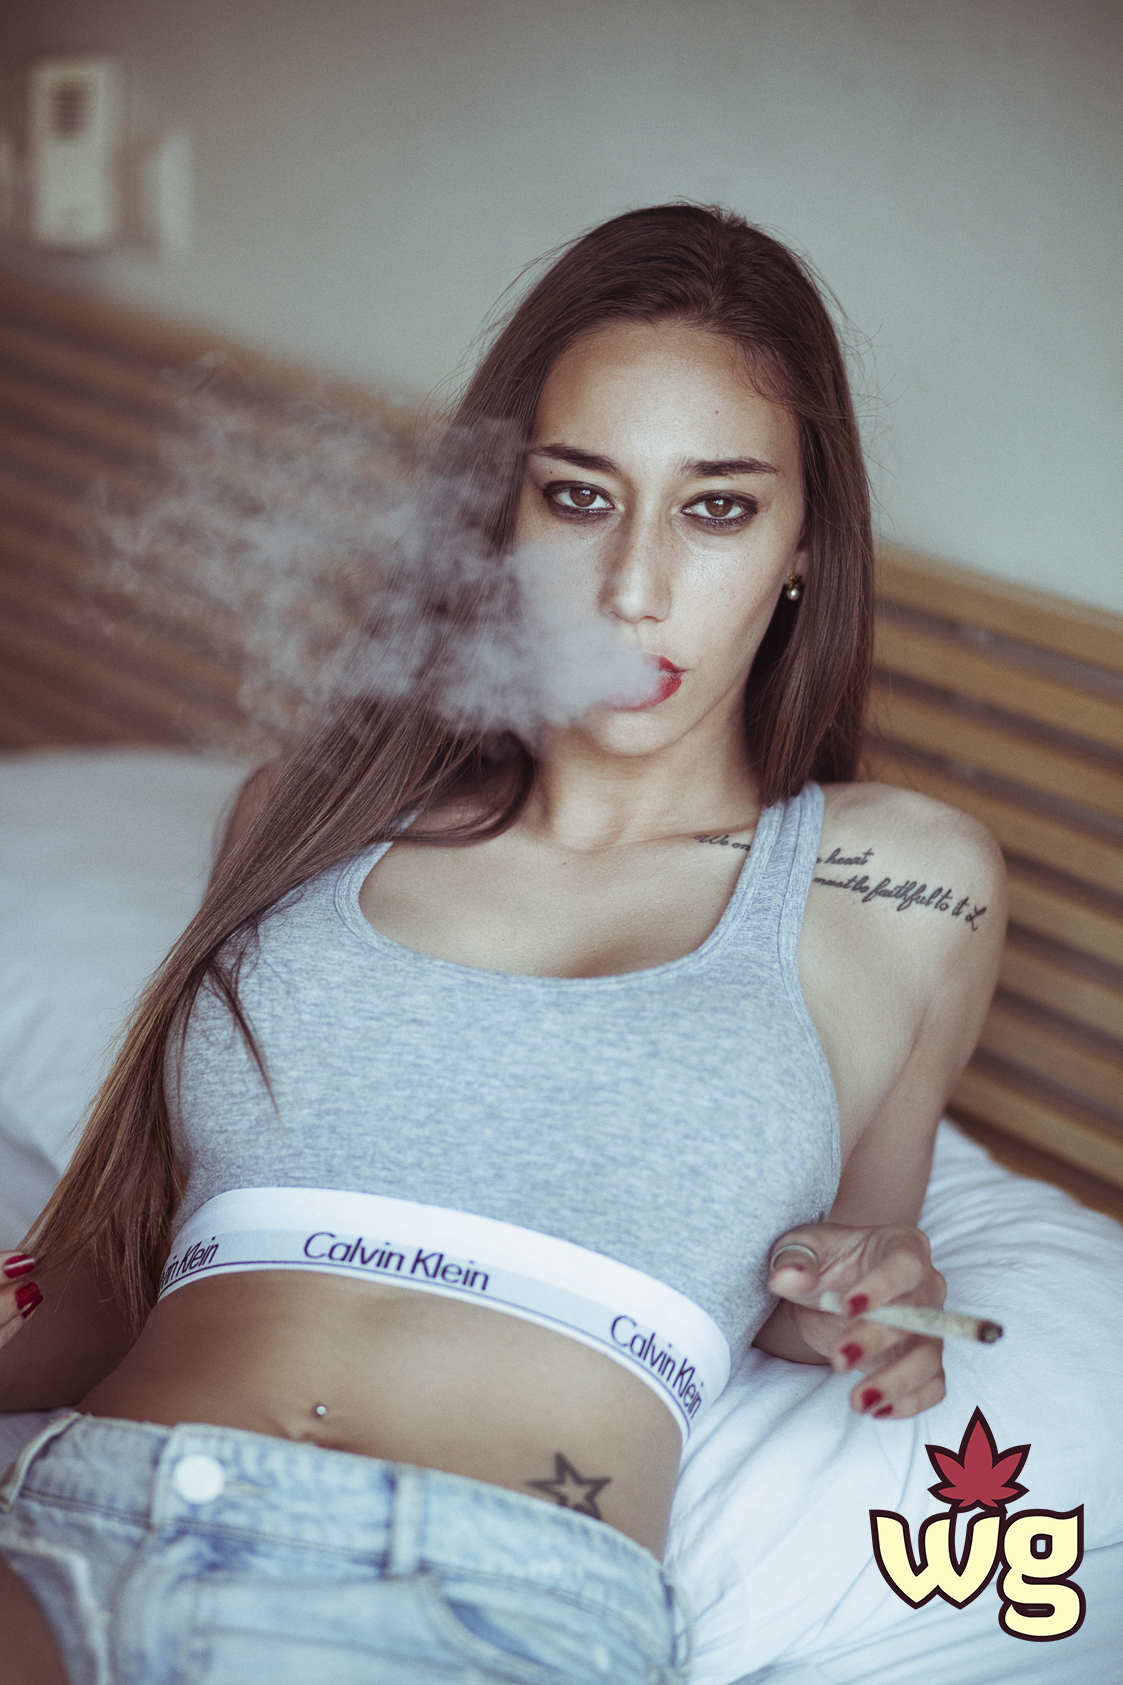 hot tattoo girl smoking cannabis | Weed Girls